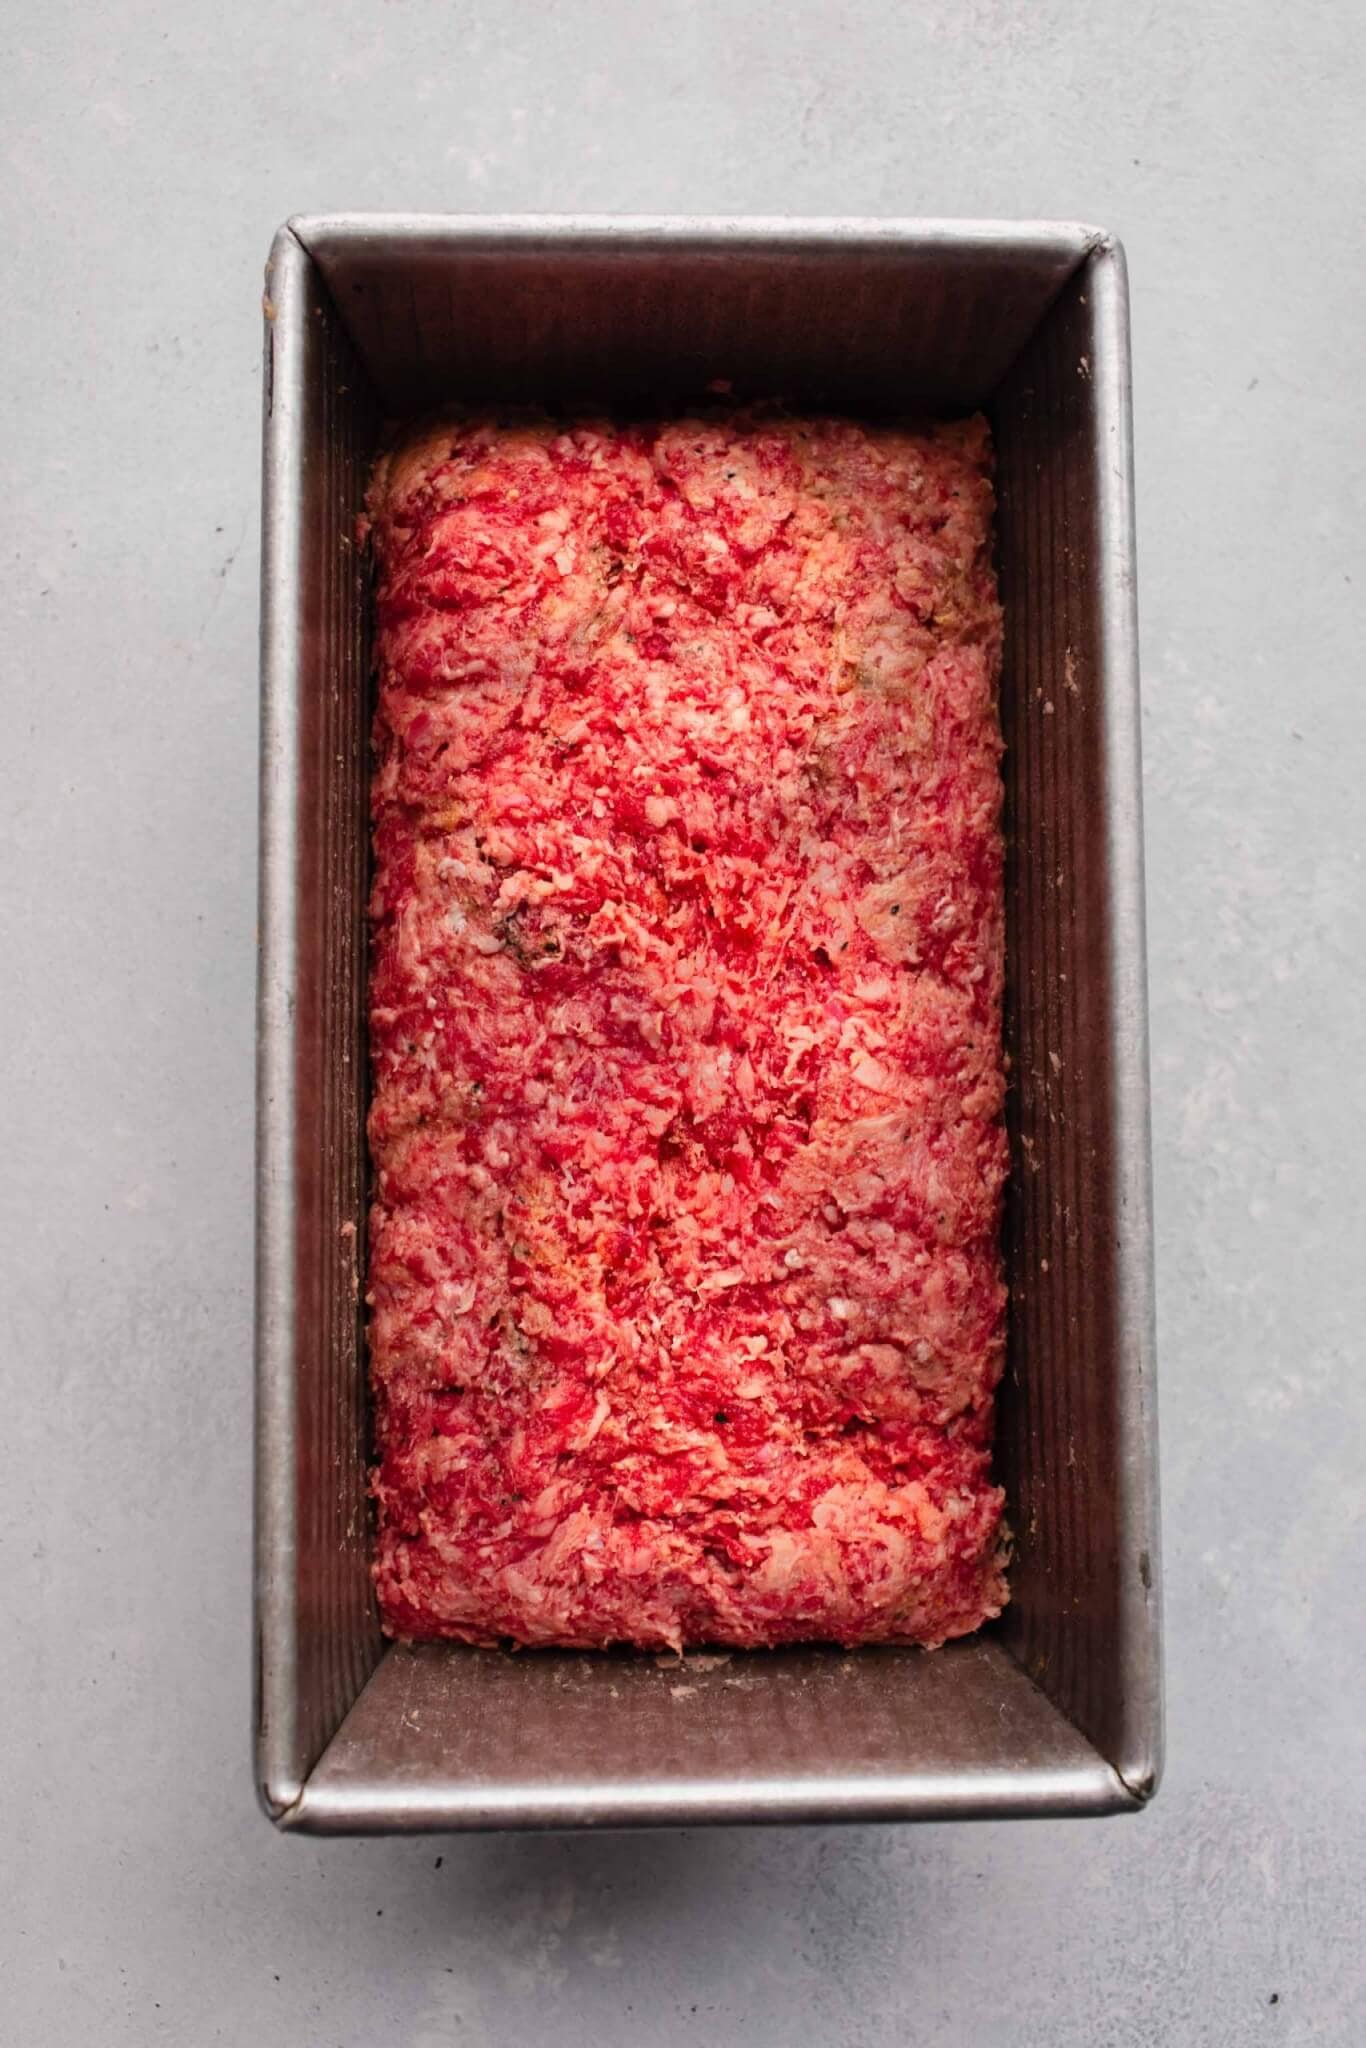 Unbaked meatloaf in pan.